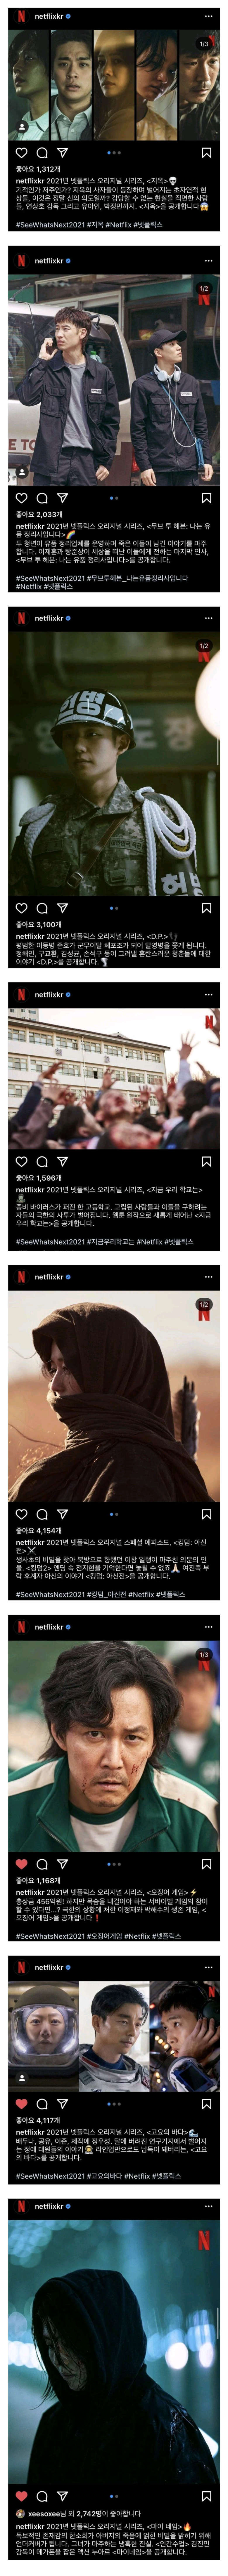 Netflix Korea's Original, Incredible Line-up This Year